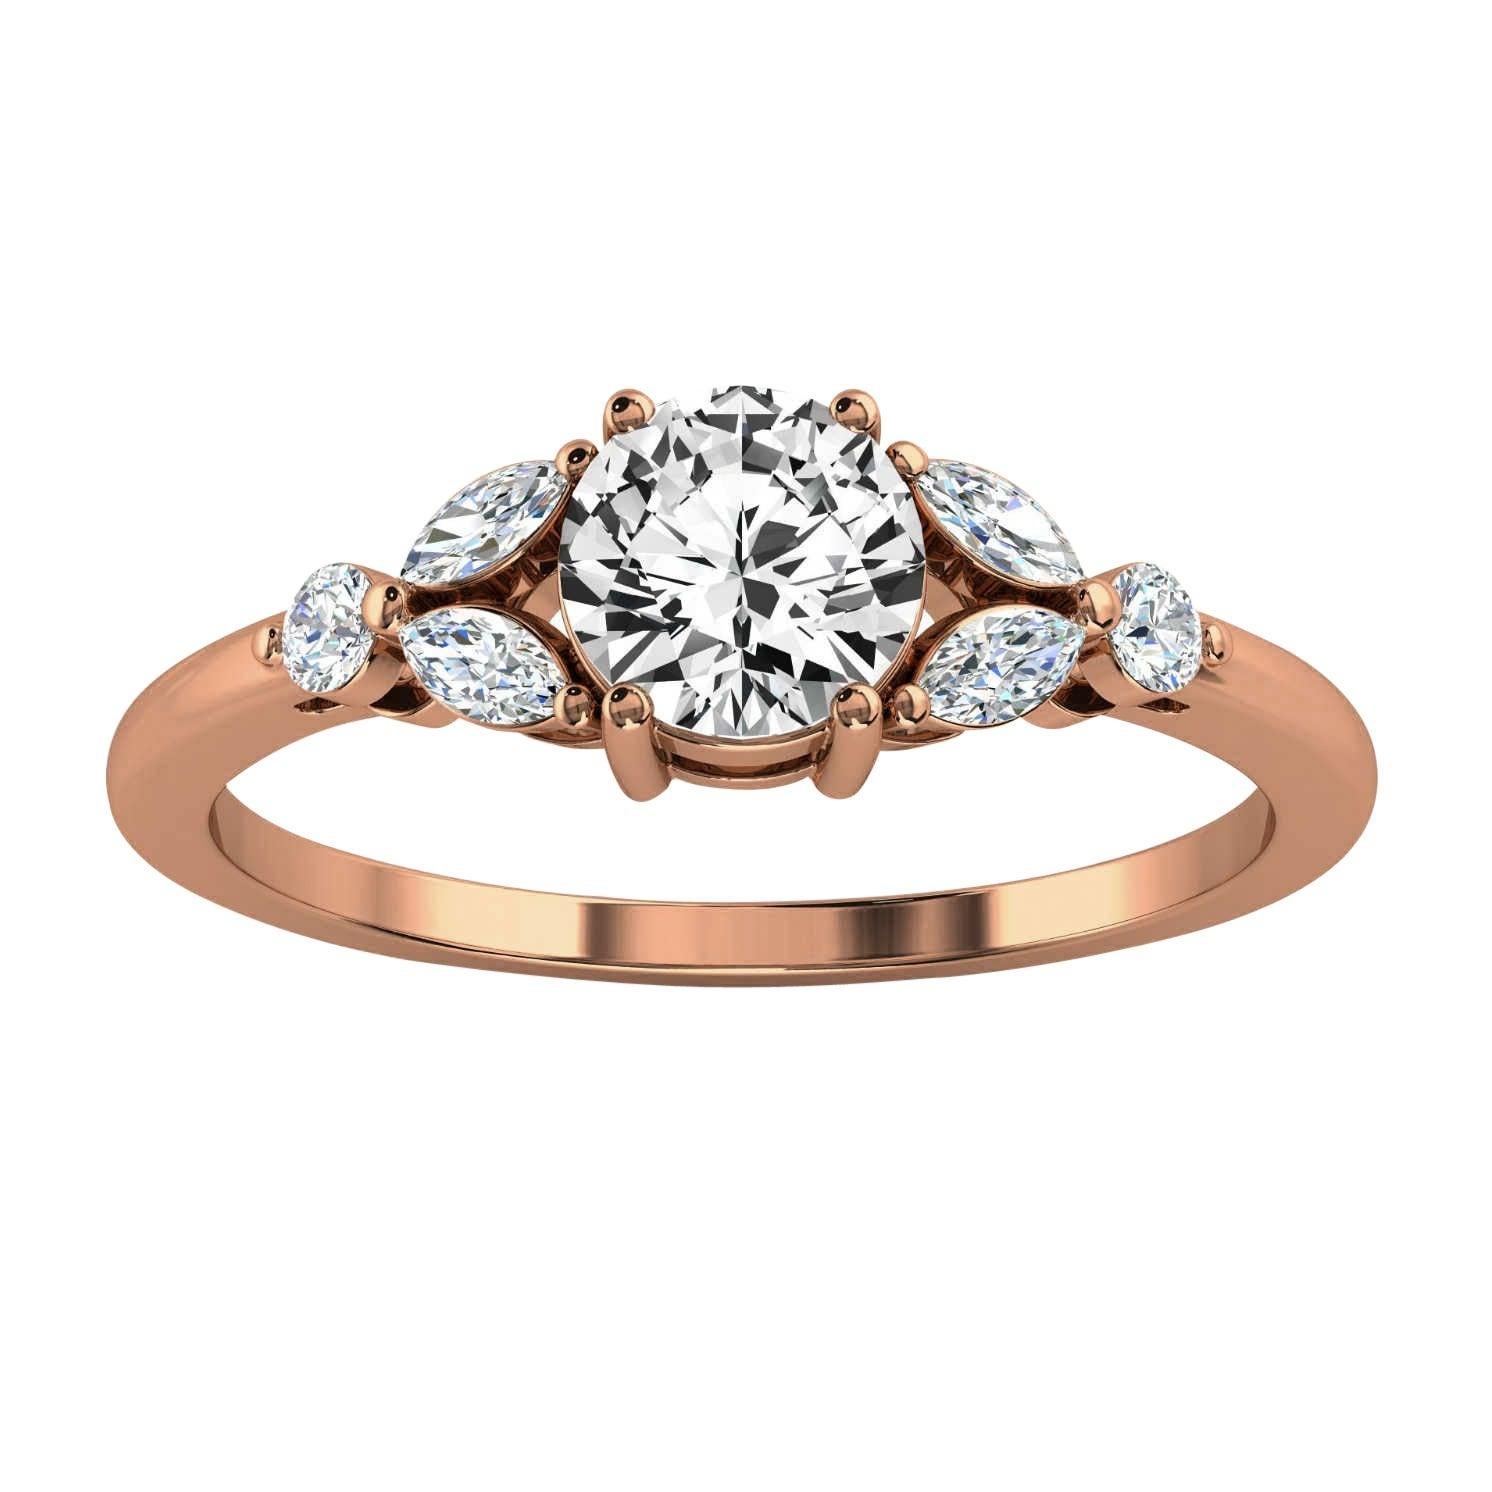 For Sale:  14 Karat Rose Gold Petite Organic Design Round Diamond Ring Center, 1/2 Carat